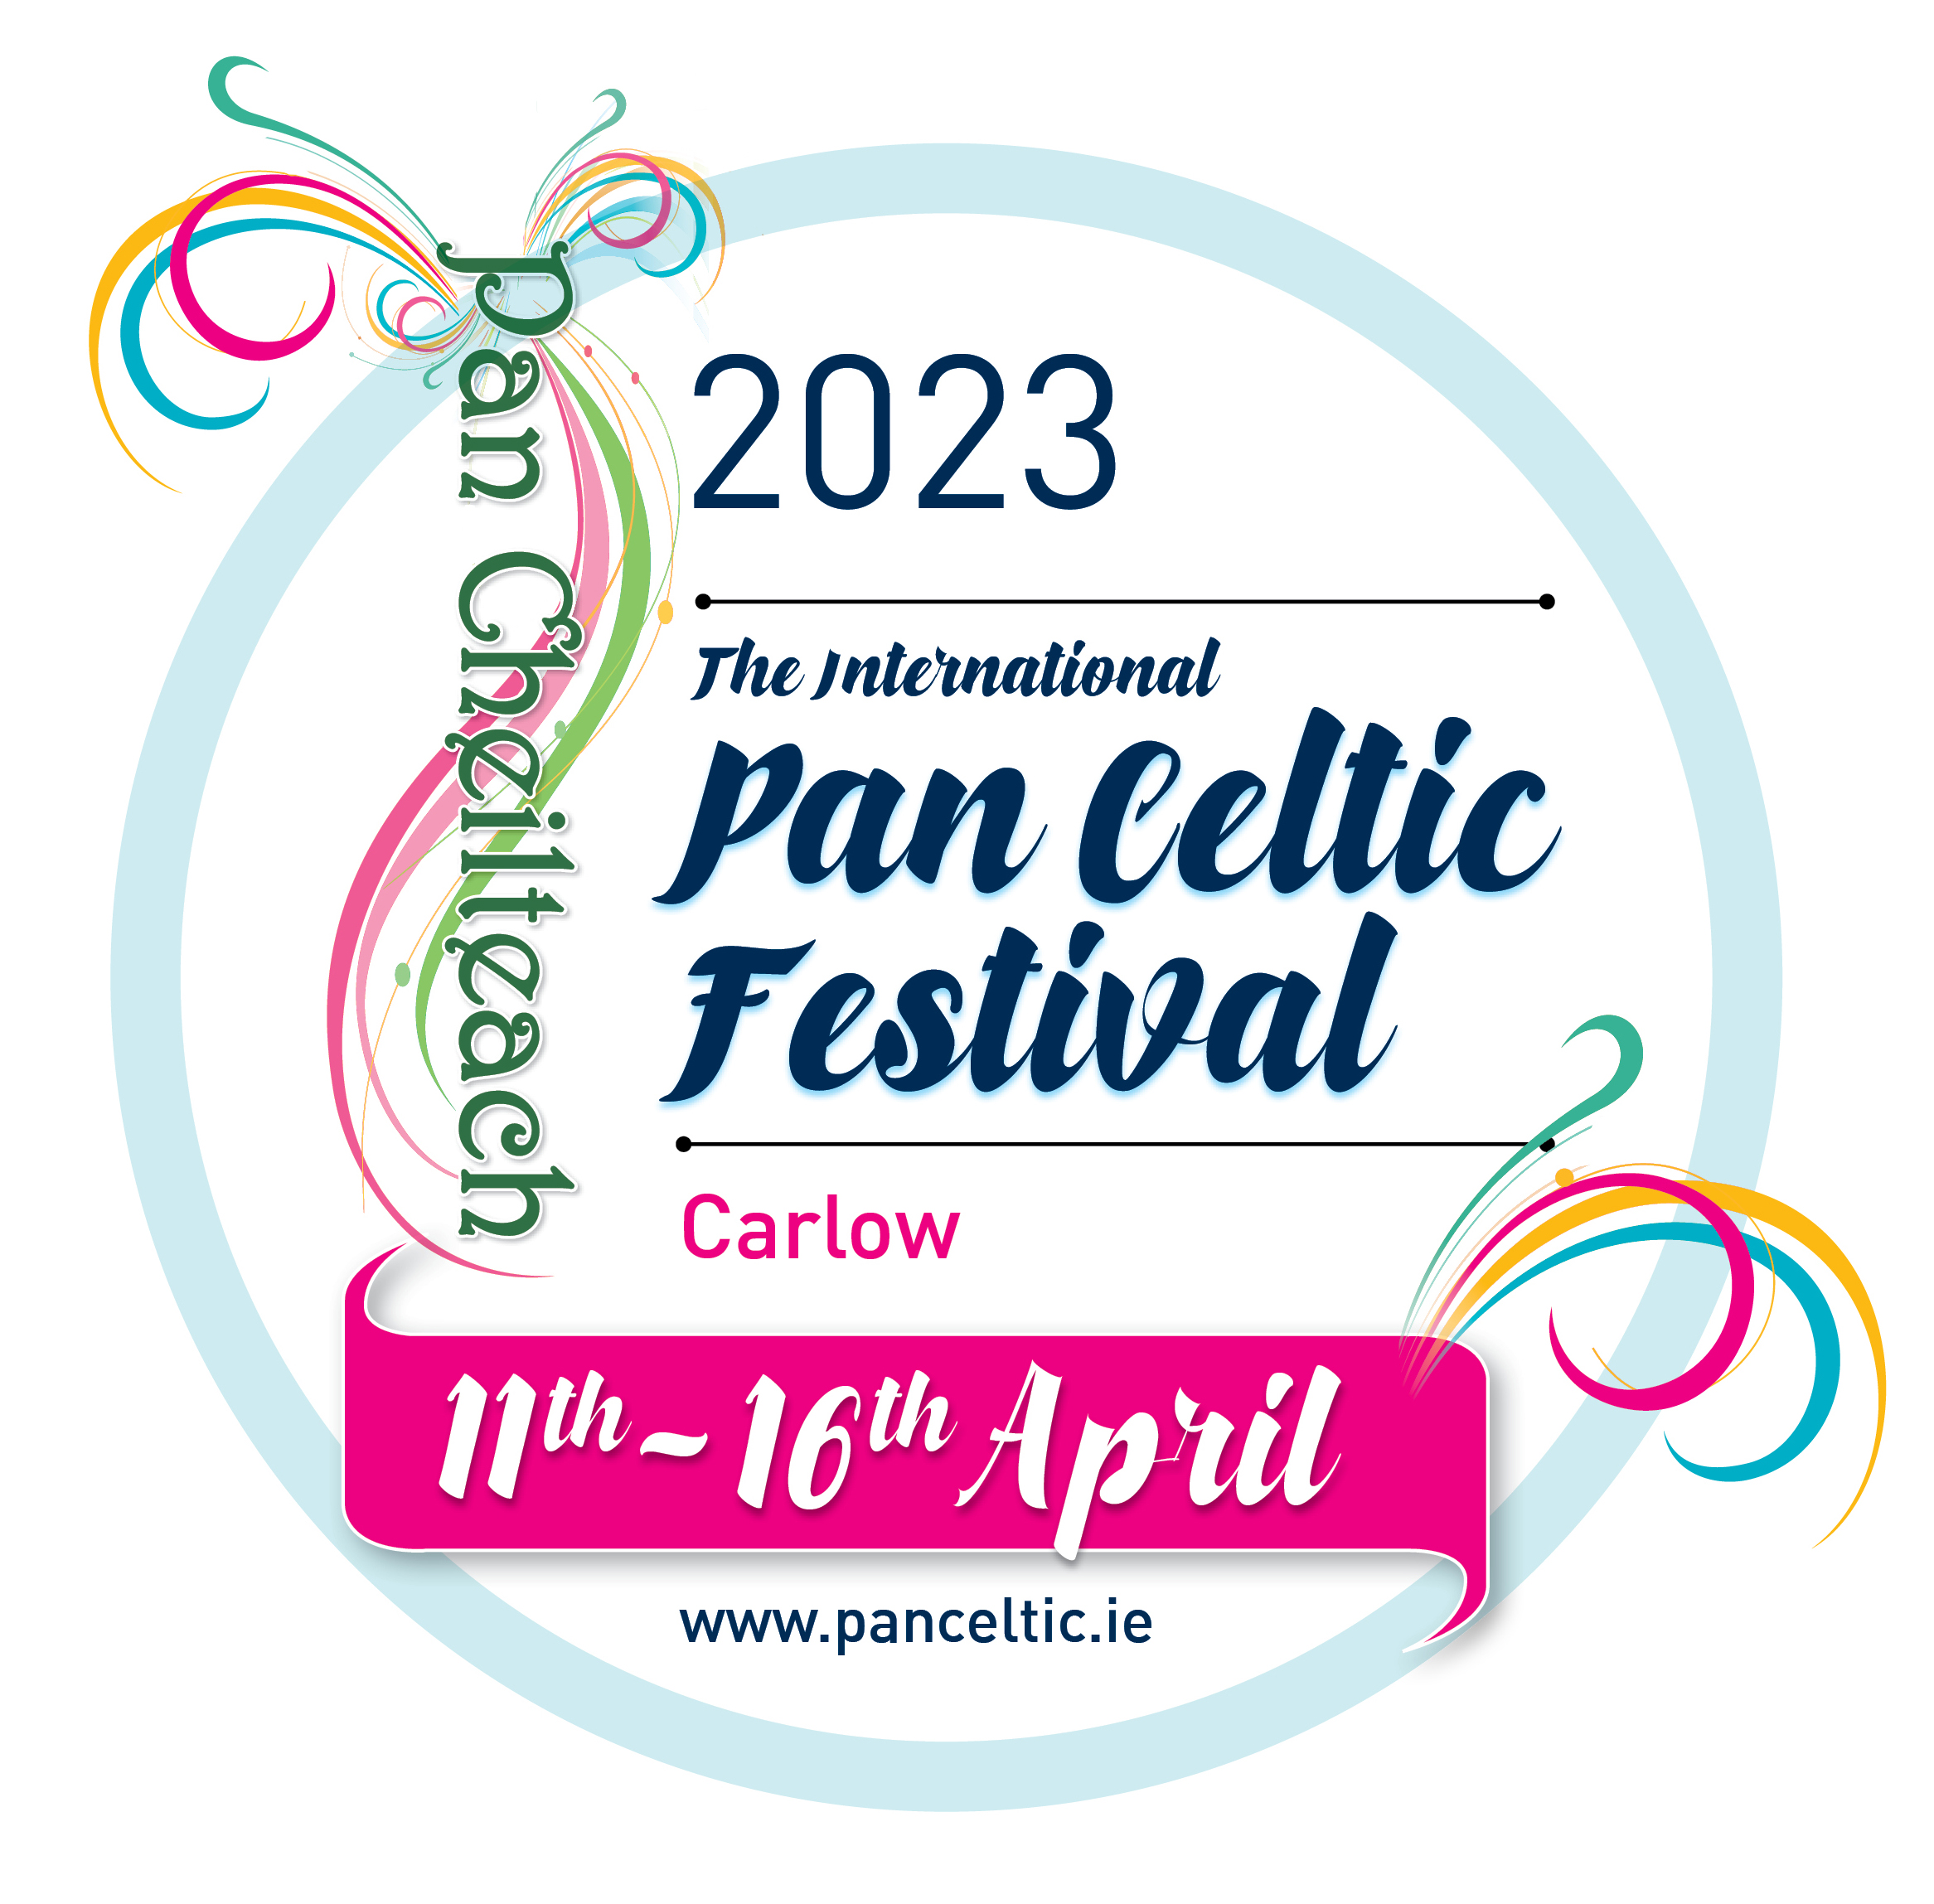 Pan Celtic Festival Carlow 